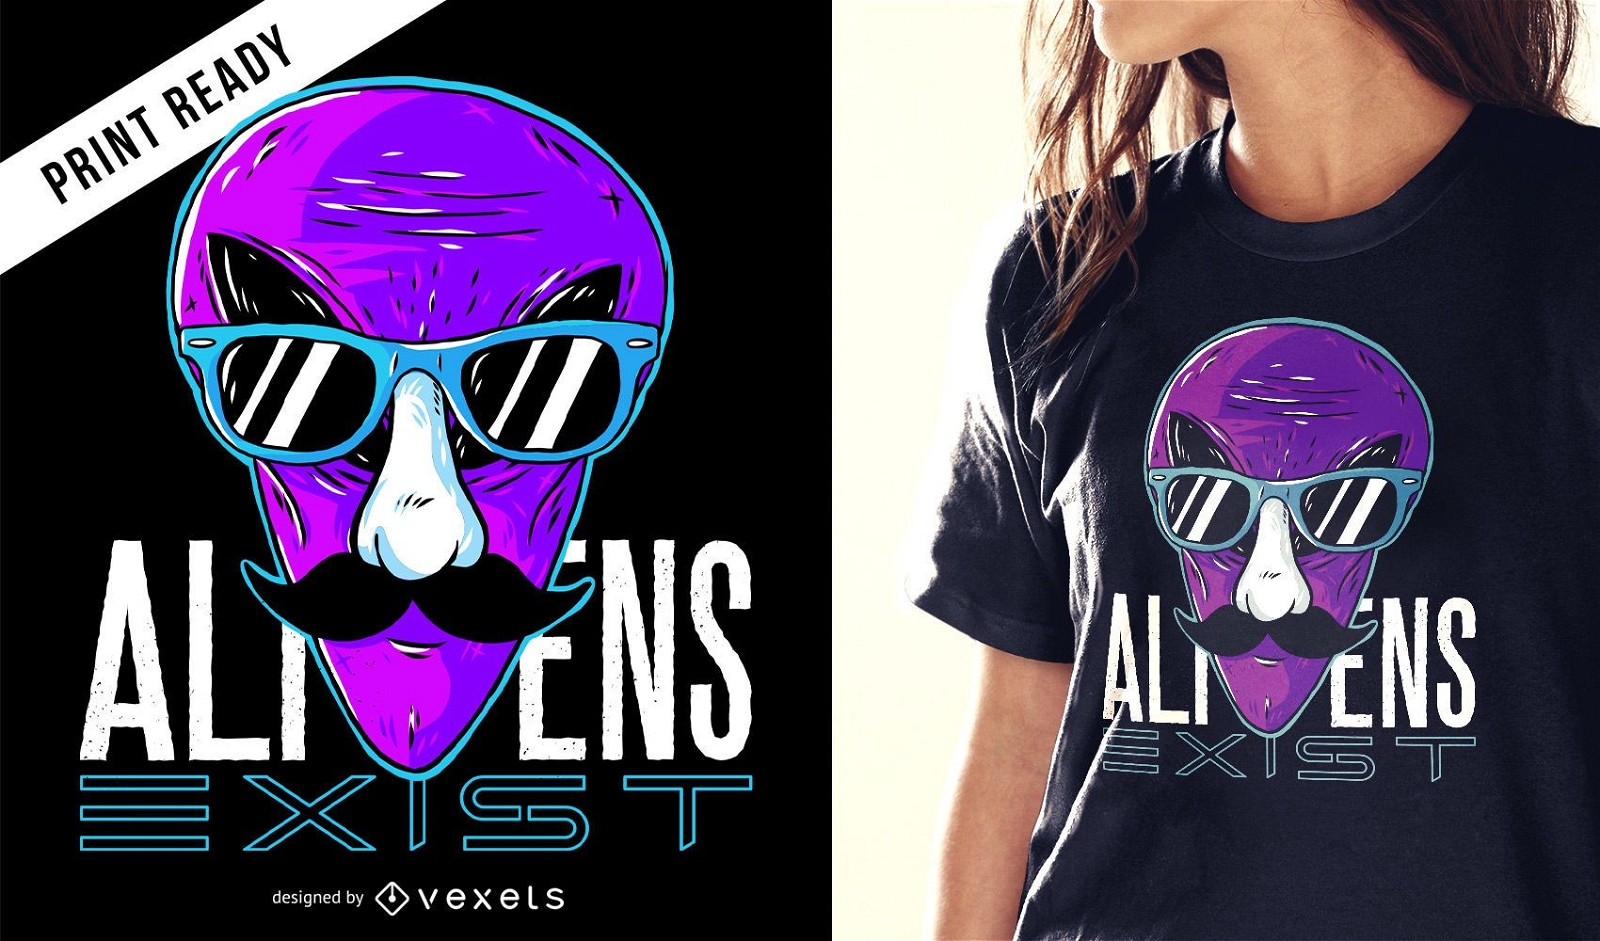 Aliens exist t-shirt design